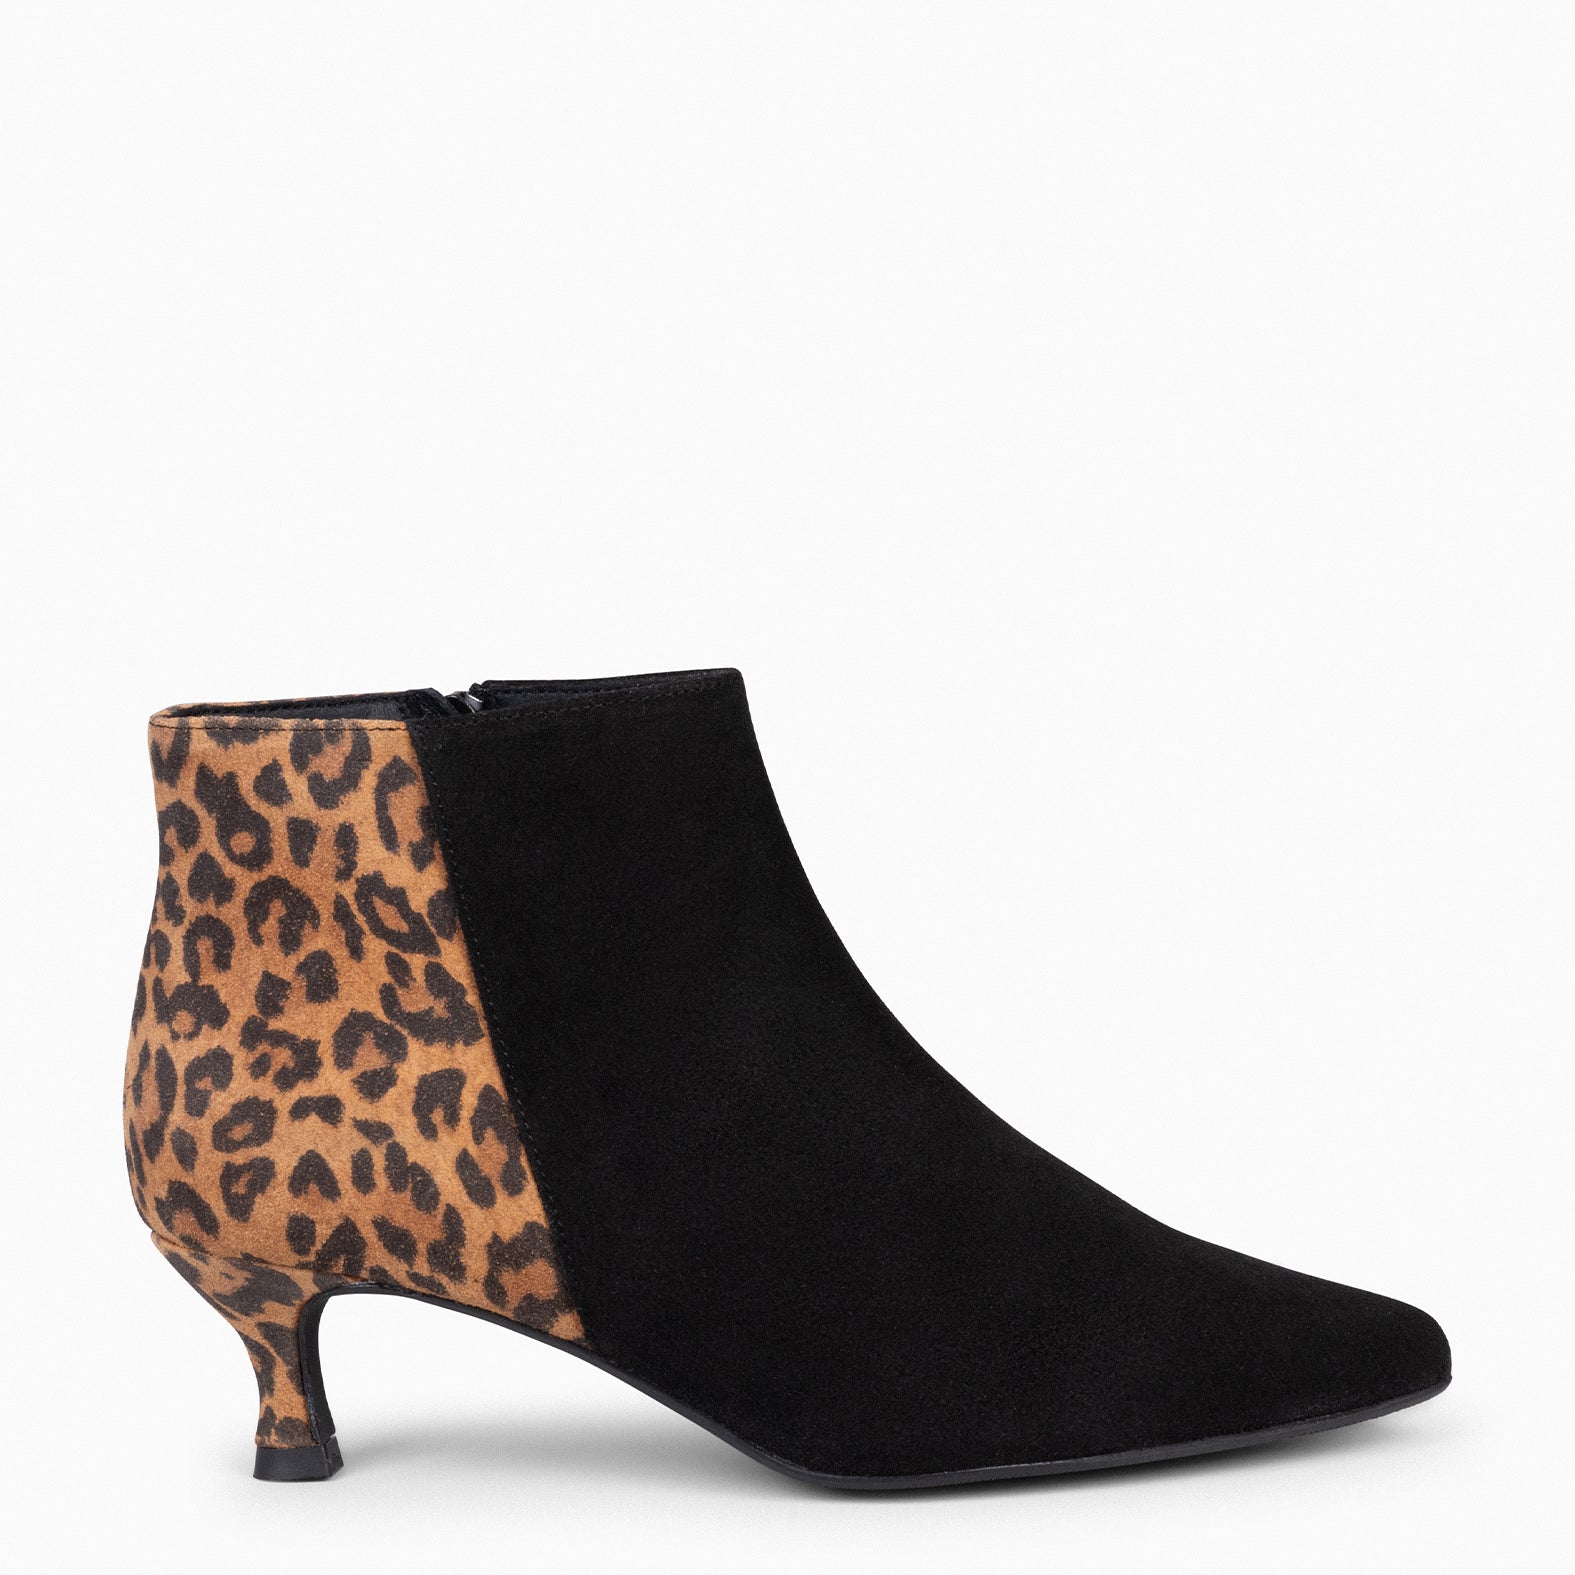 ROYAL SUEDE – BLACK LEOPARD Low heel booties